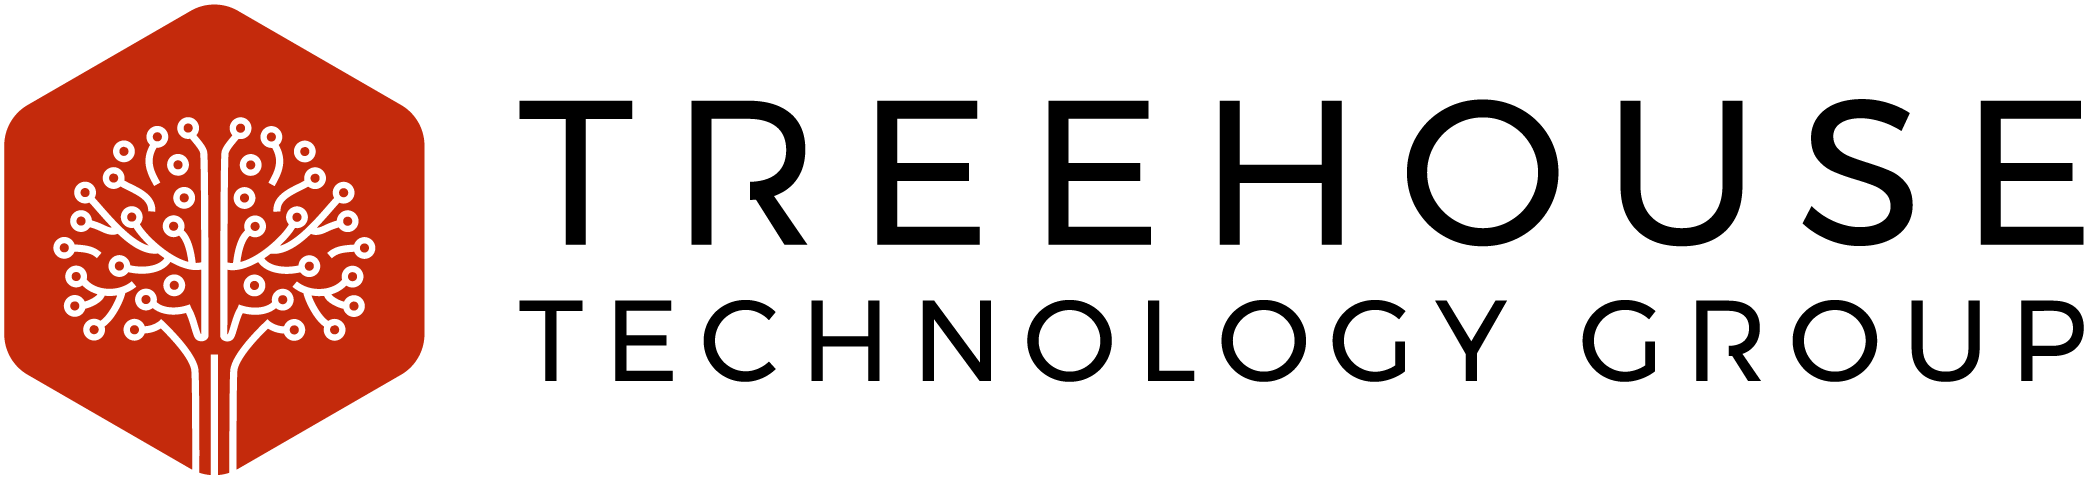 treehouse technology group logo